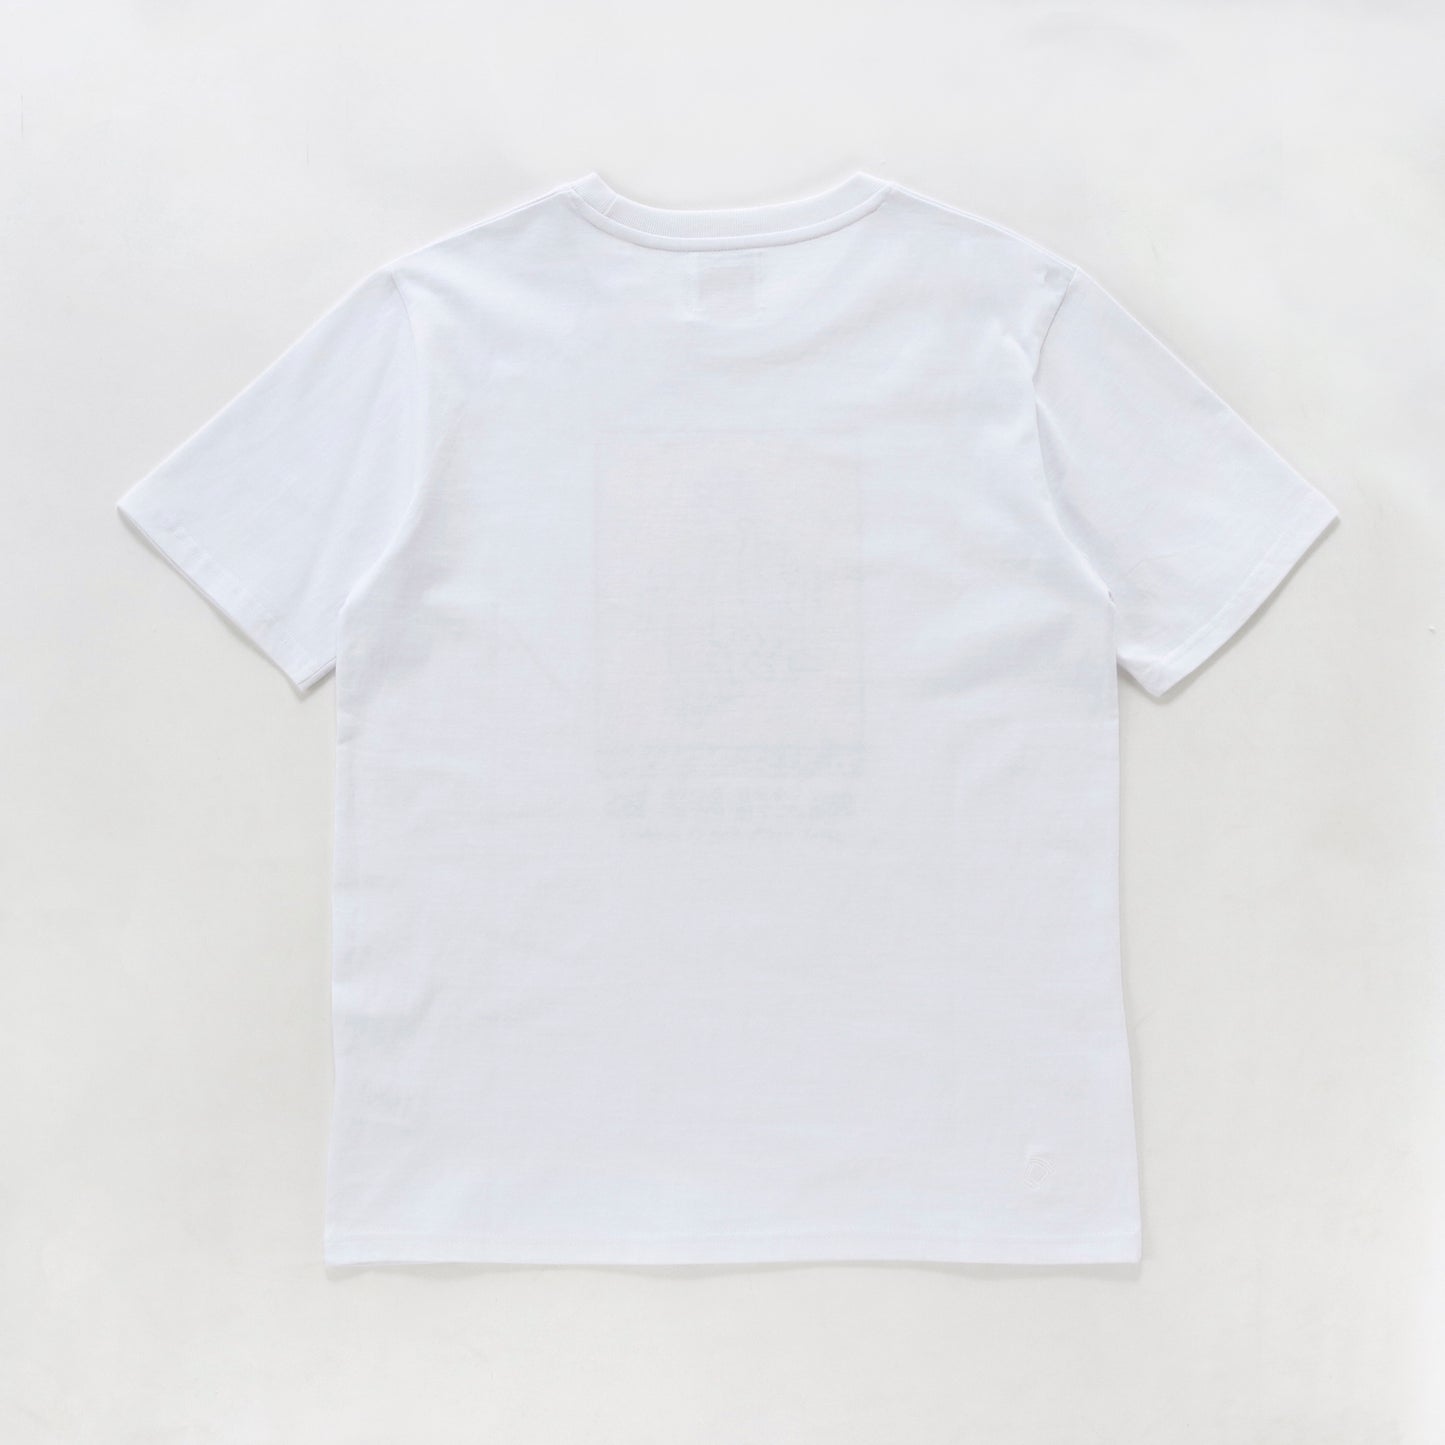 MEXIDIOS '86 Tシャツ - UNISEX - ホワイト